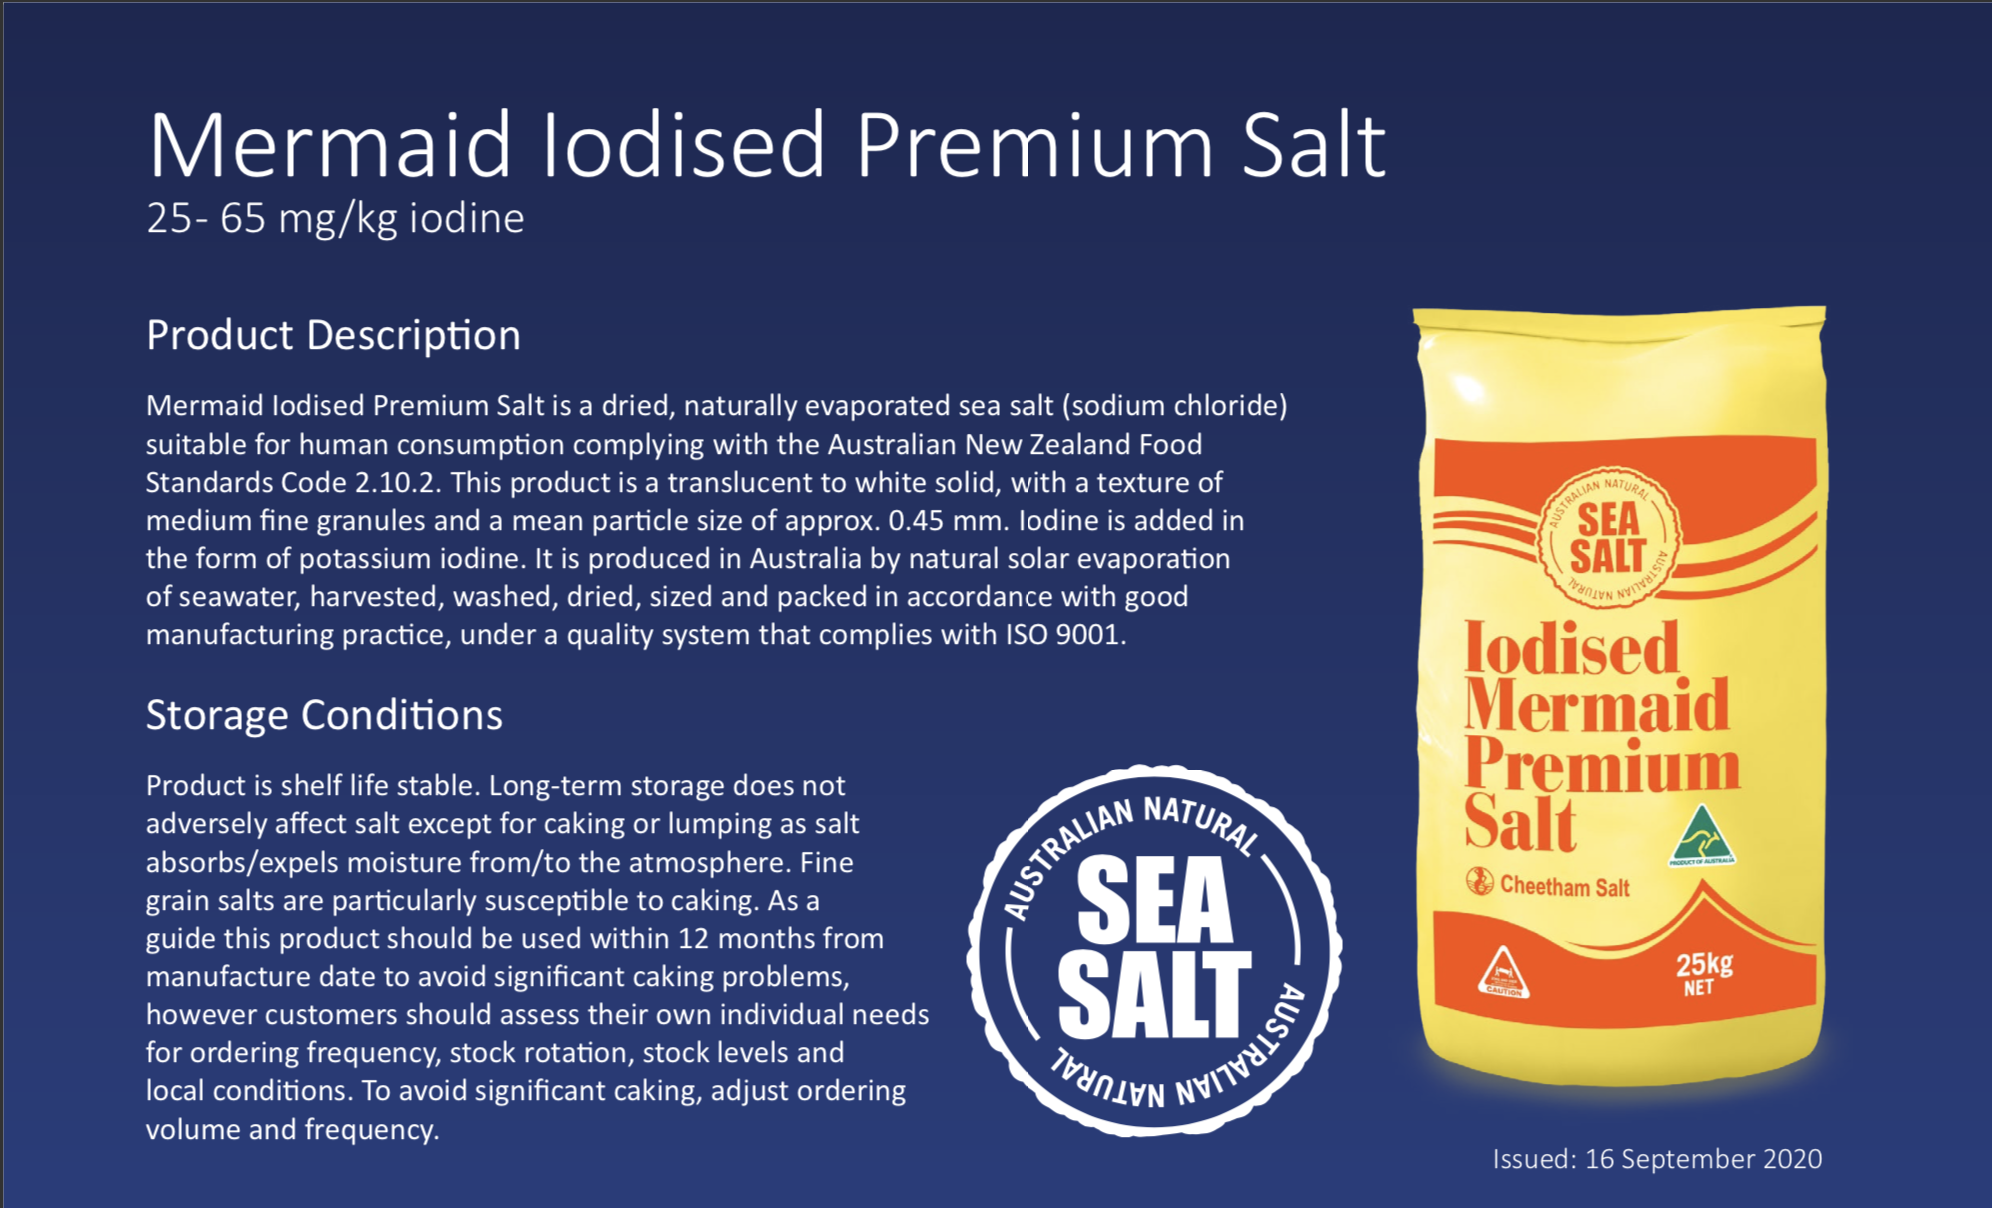 Mermaid Iodised Premium Salt product description. The product description includes a seal that says 